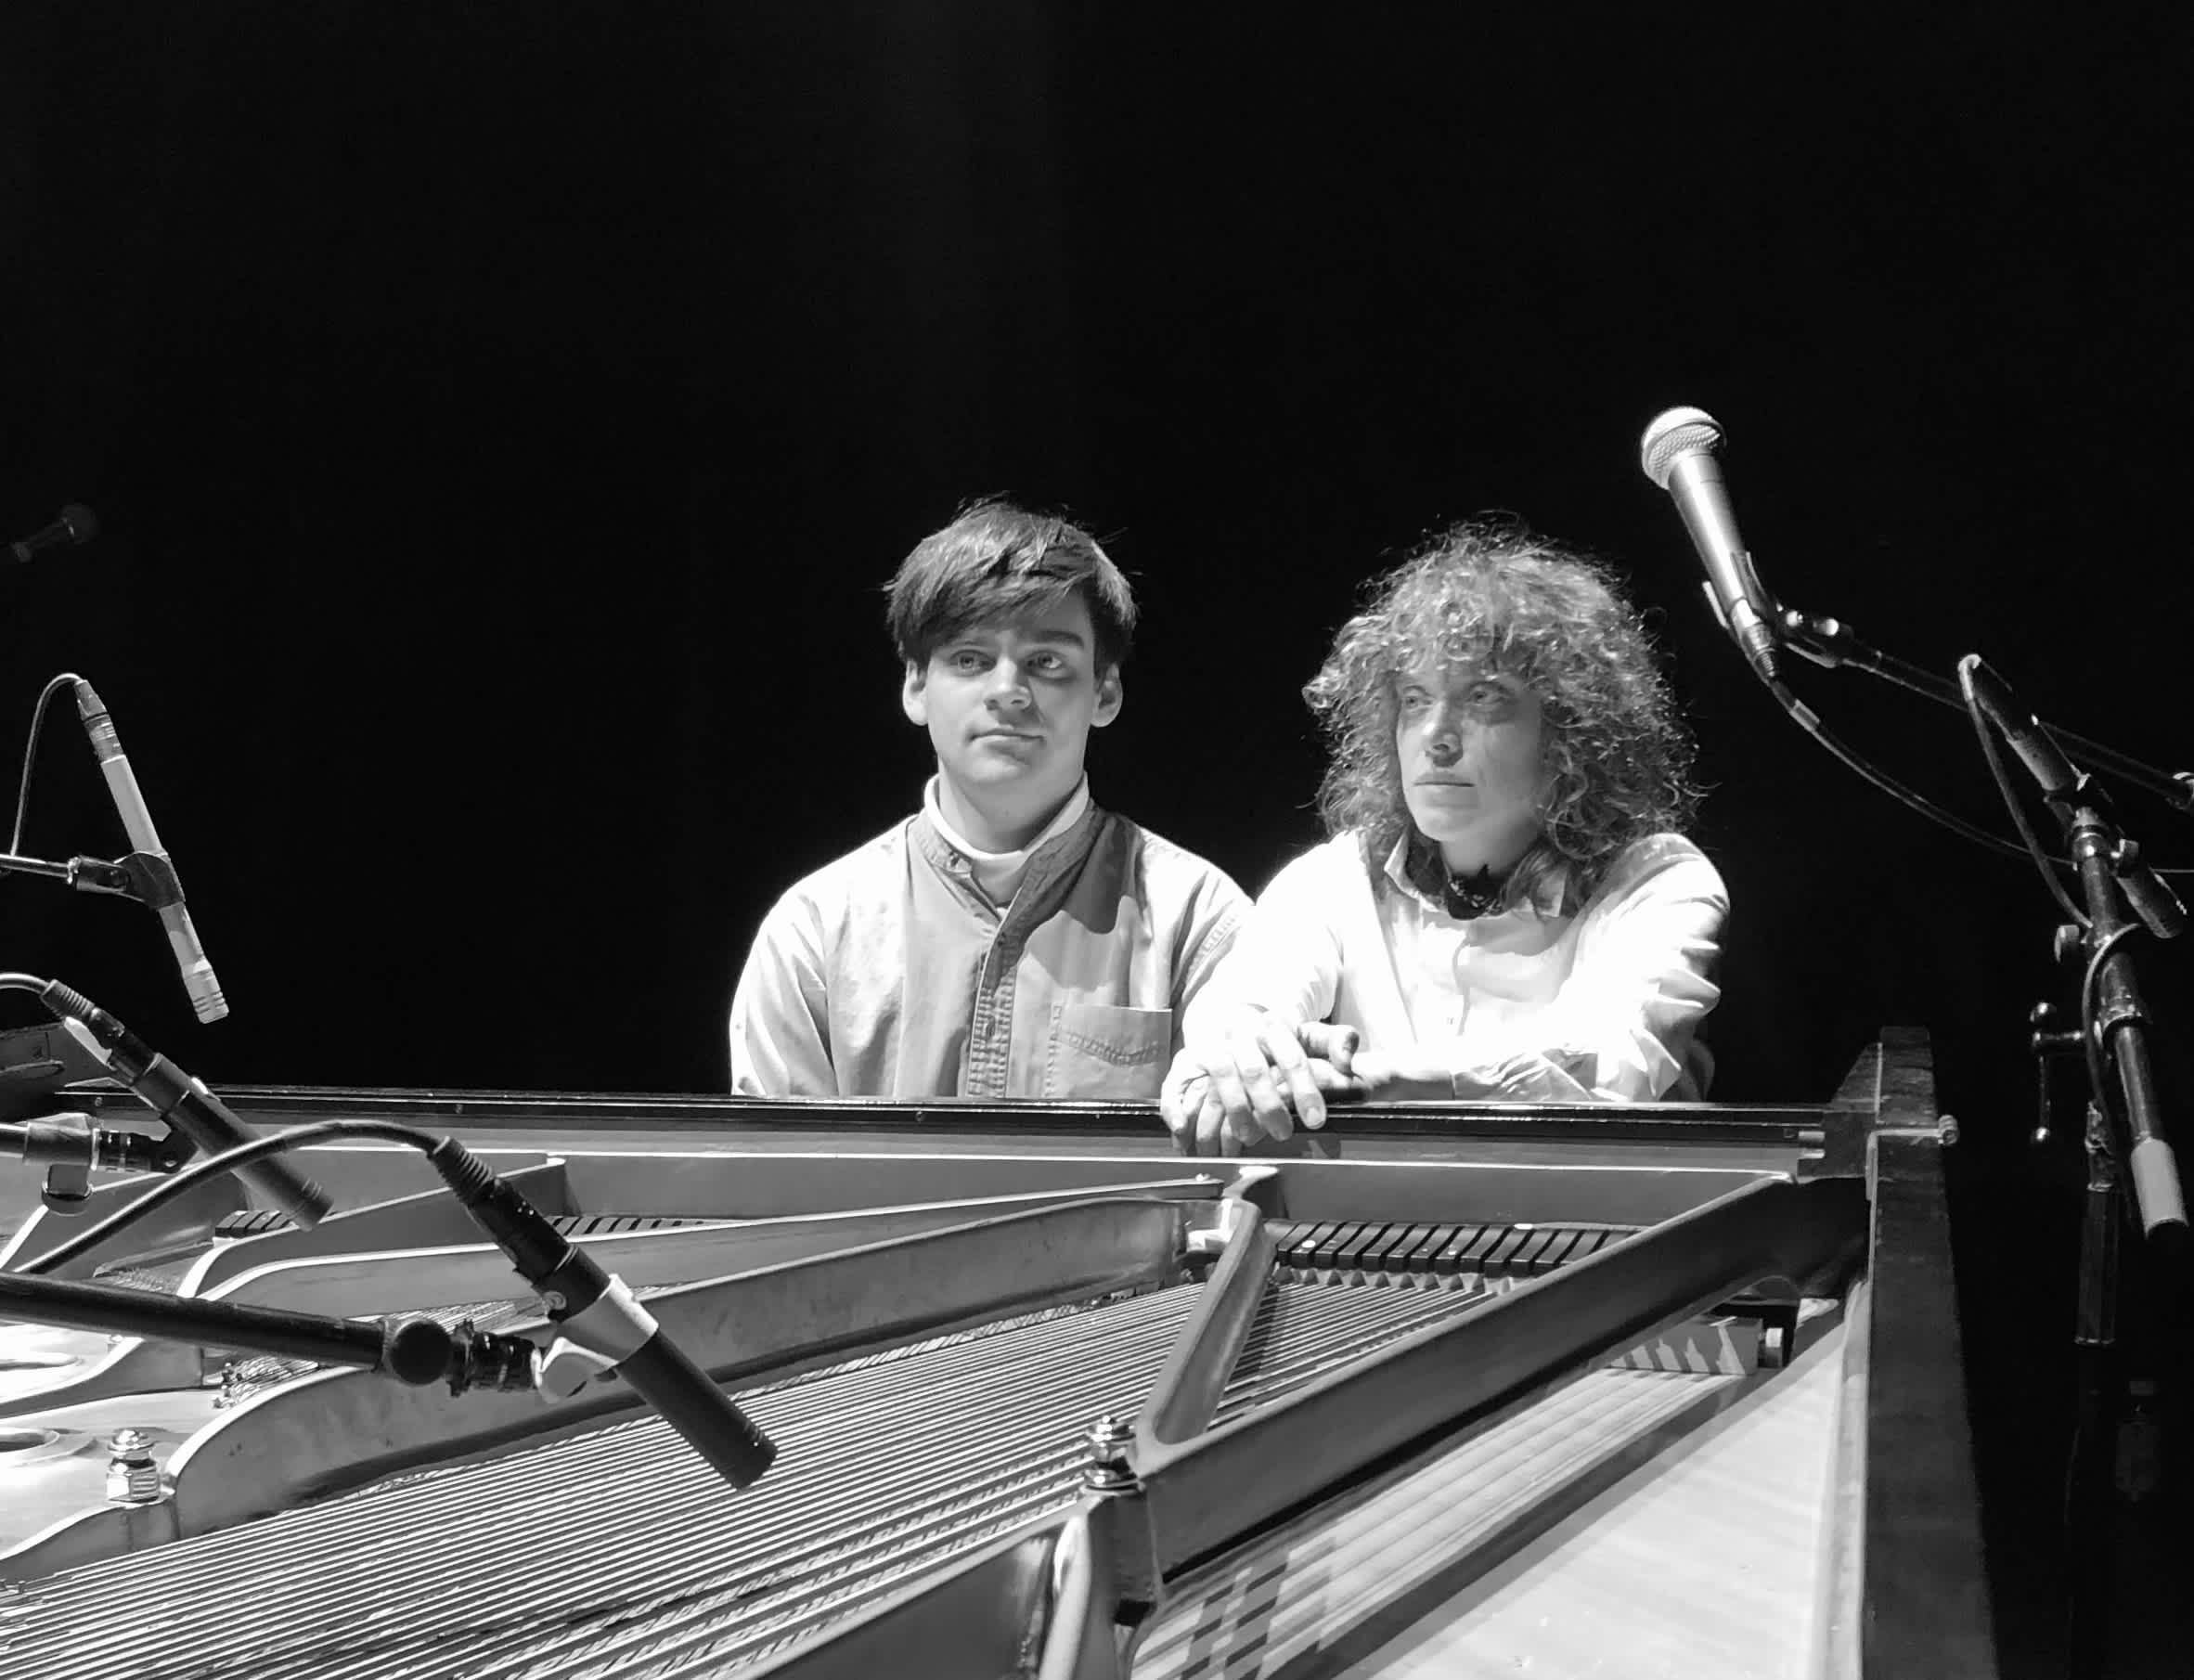 Max Eilbacher and Ka Baird seated at a piano.